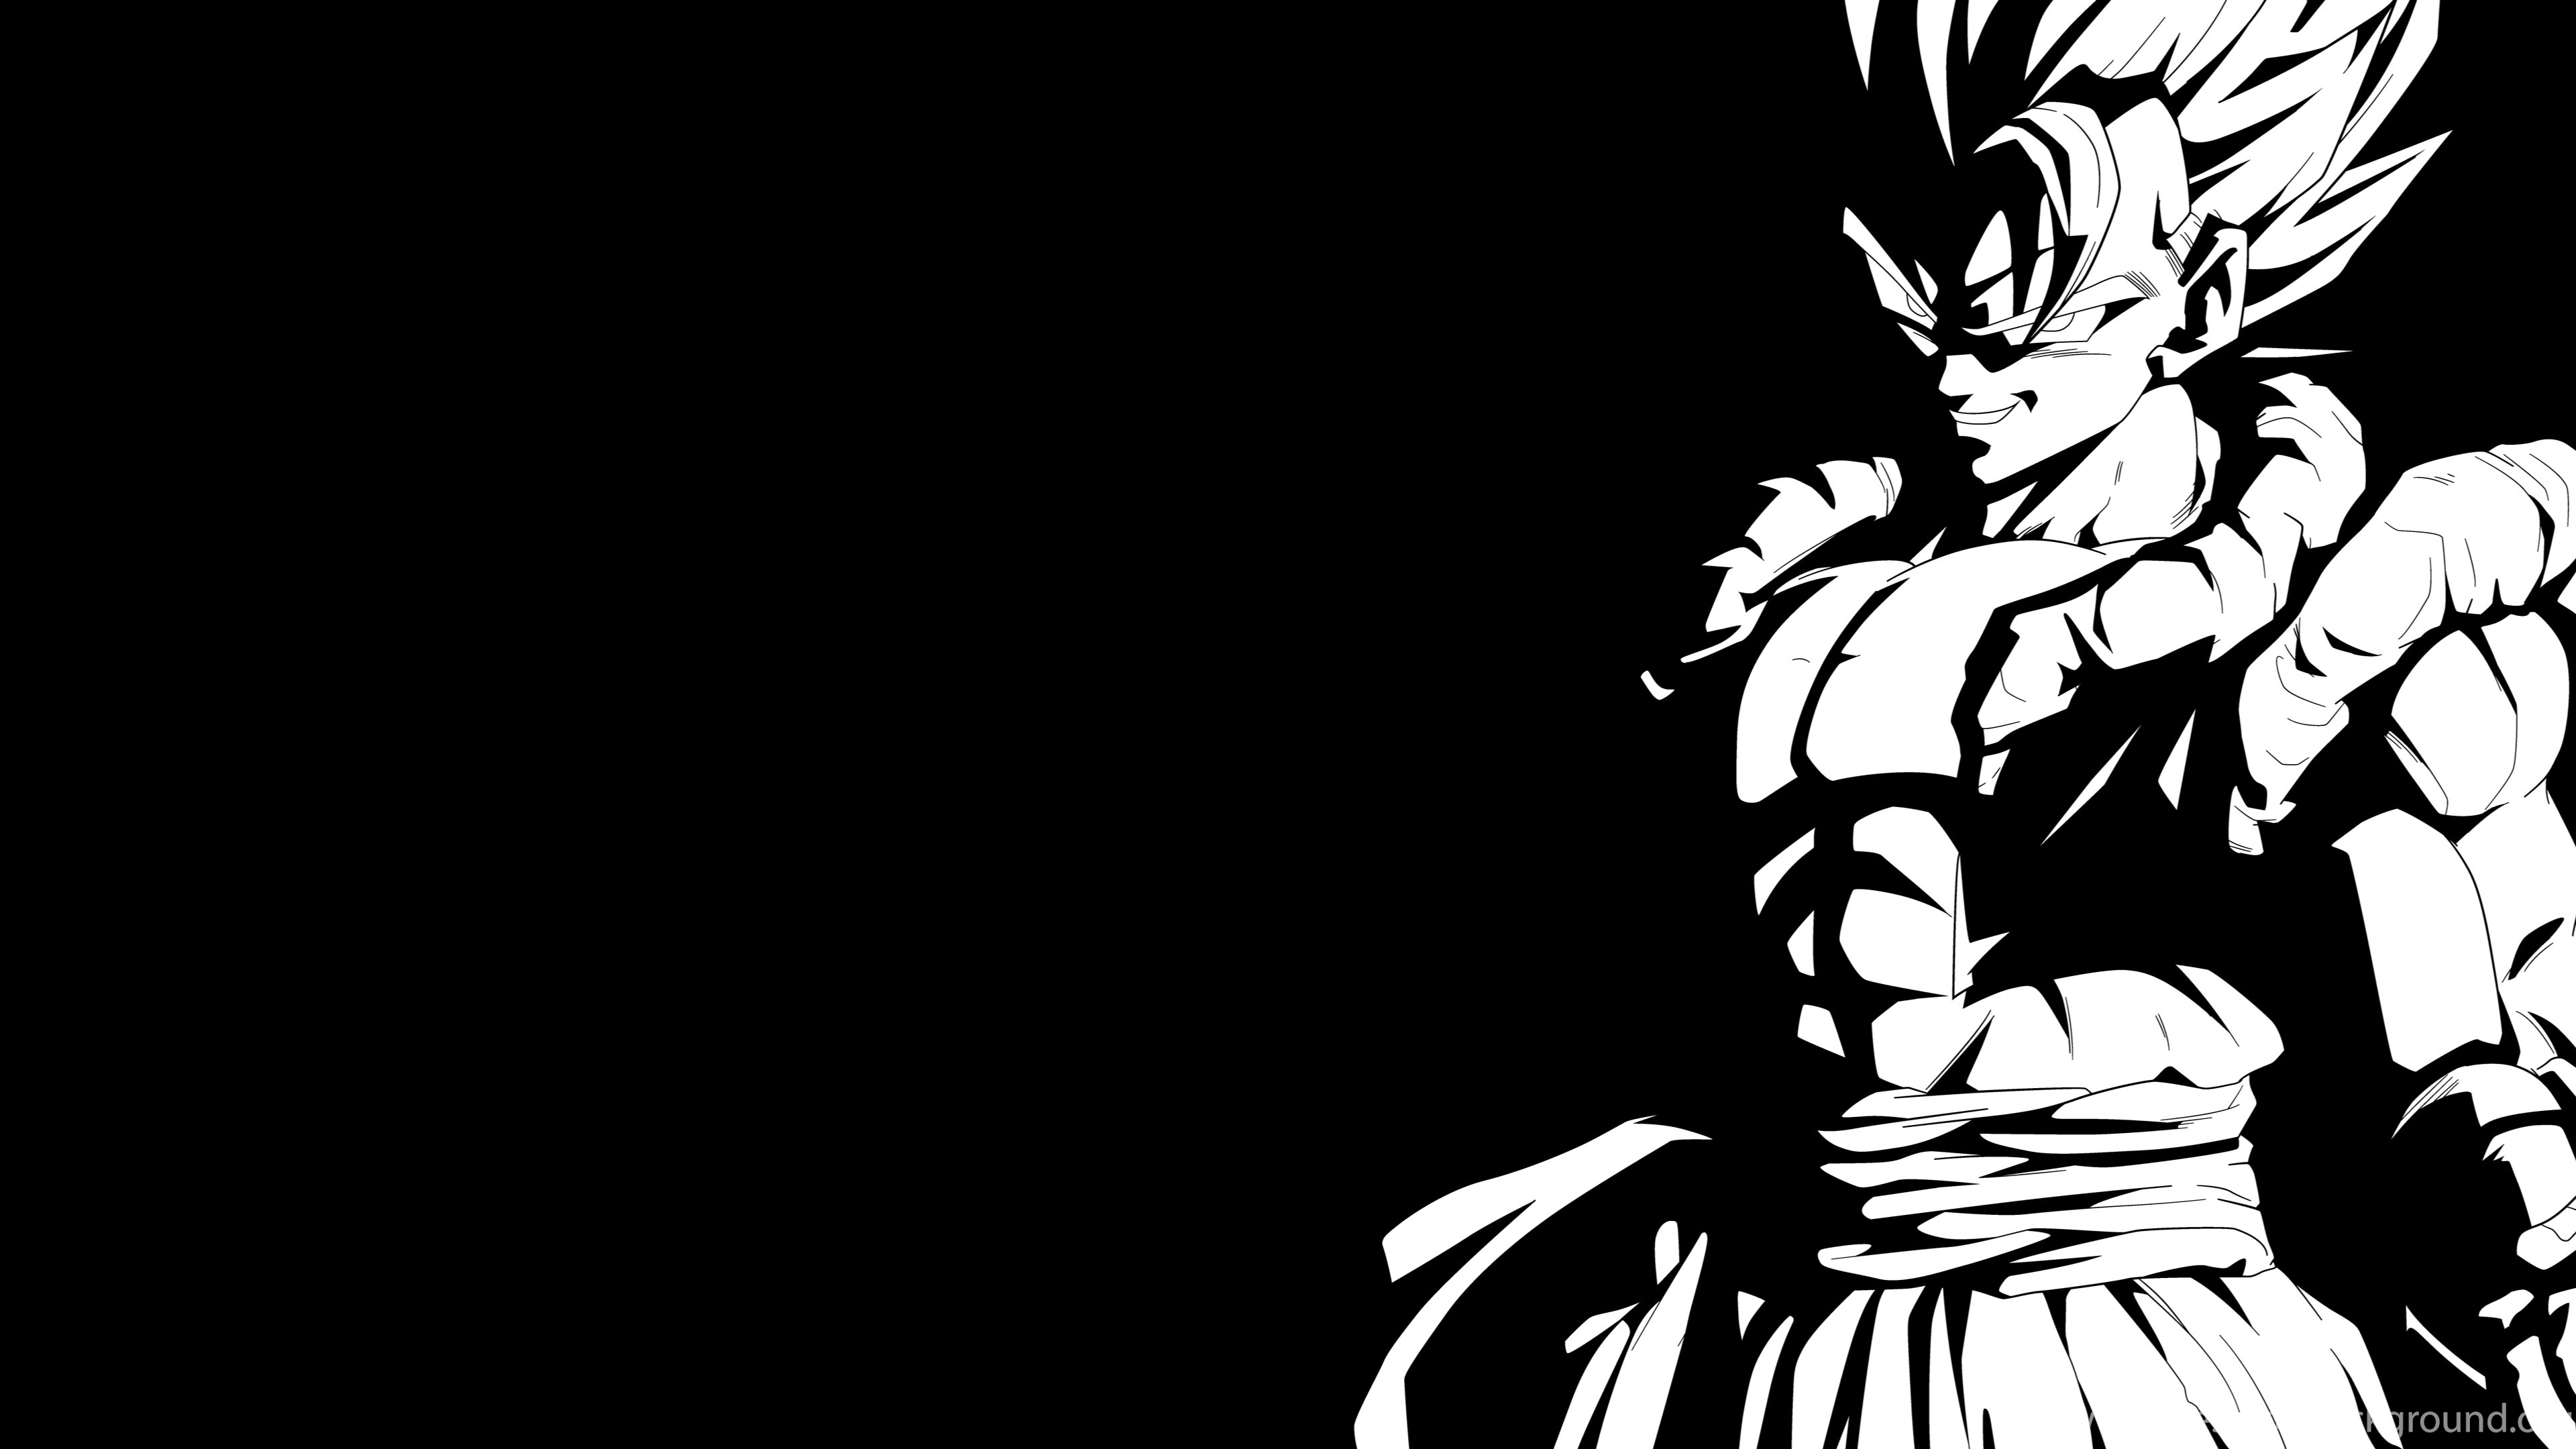 Super Gogeta Black And White 4K Wallpaper By RayzorBlade189 On. Desktop Background